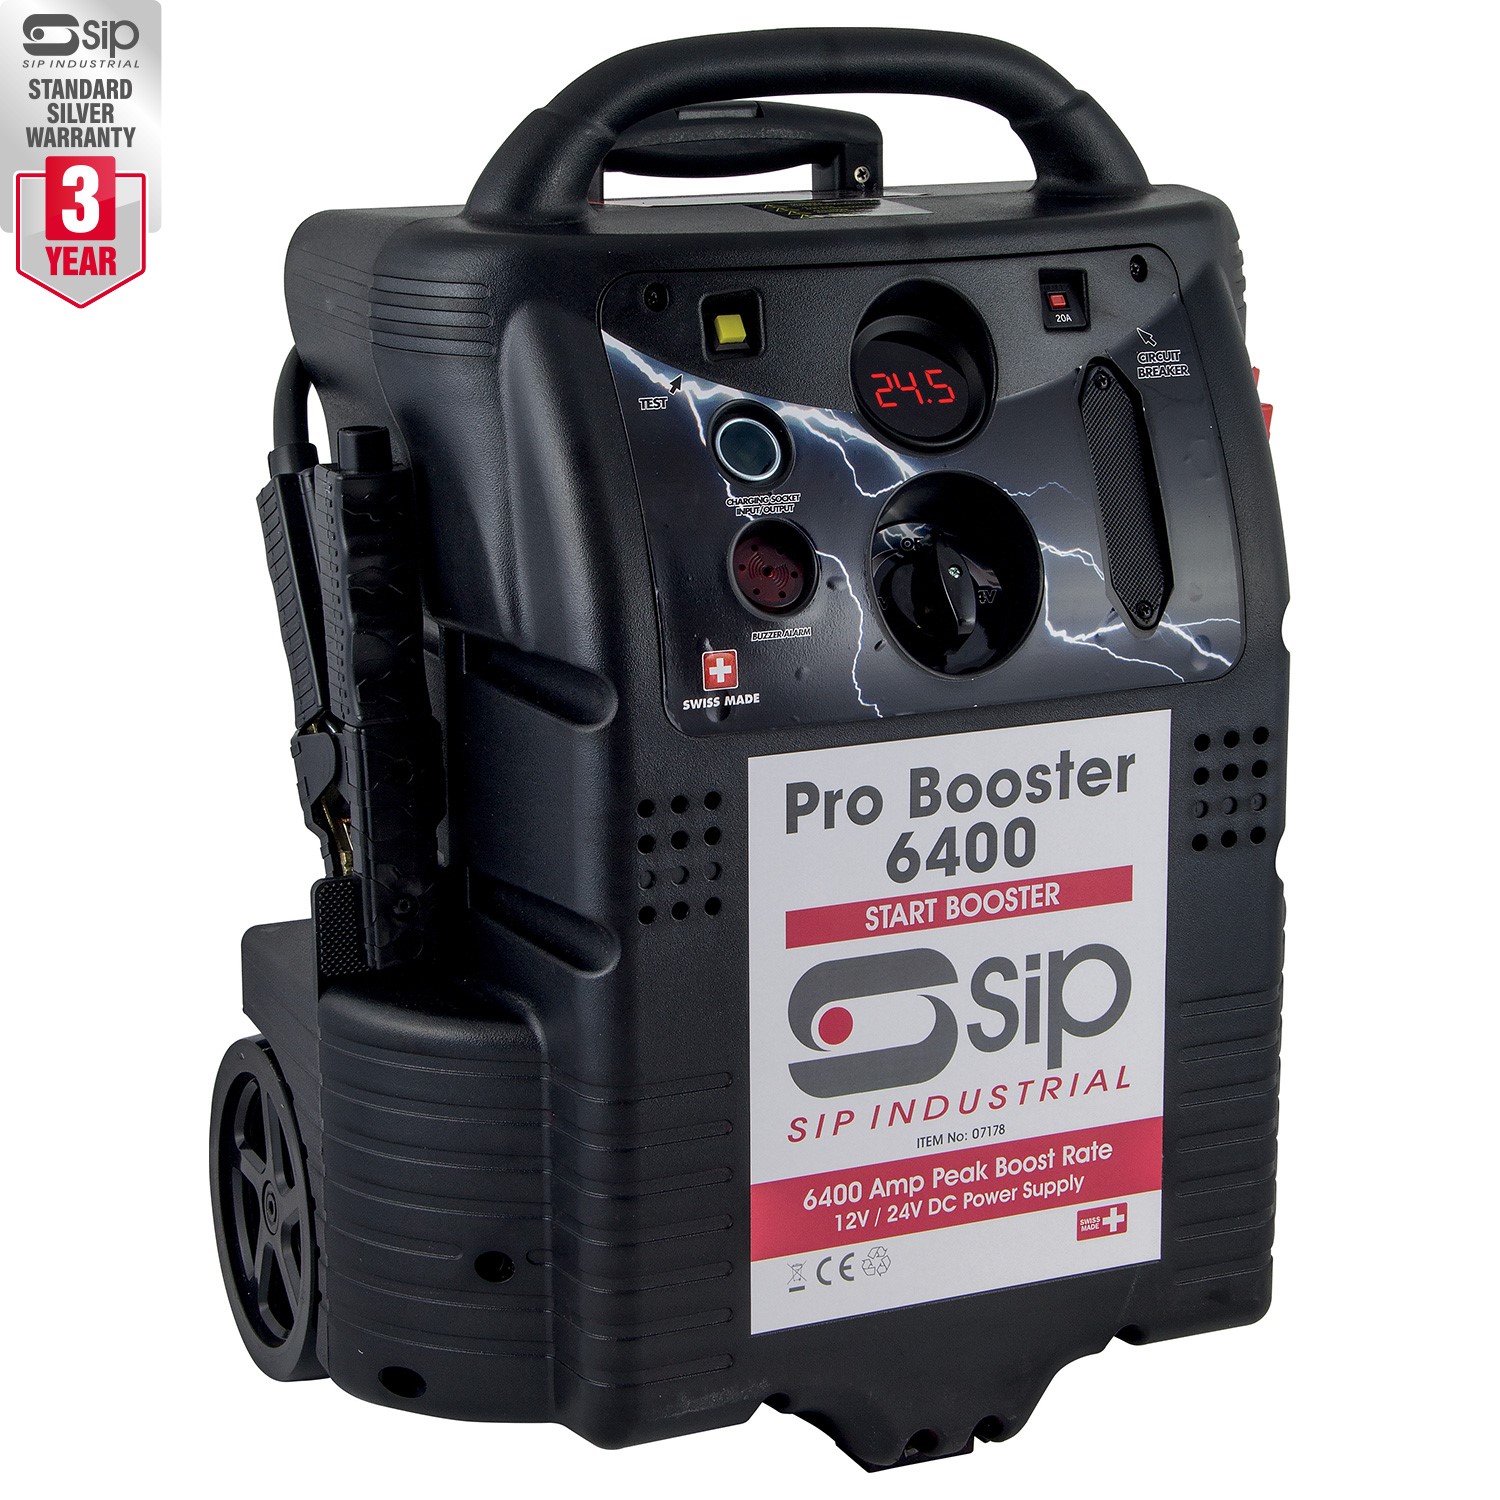 SIP 12v/24v Pro Booster 6400 - SIP Industrial Products Official Website